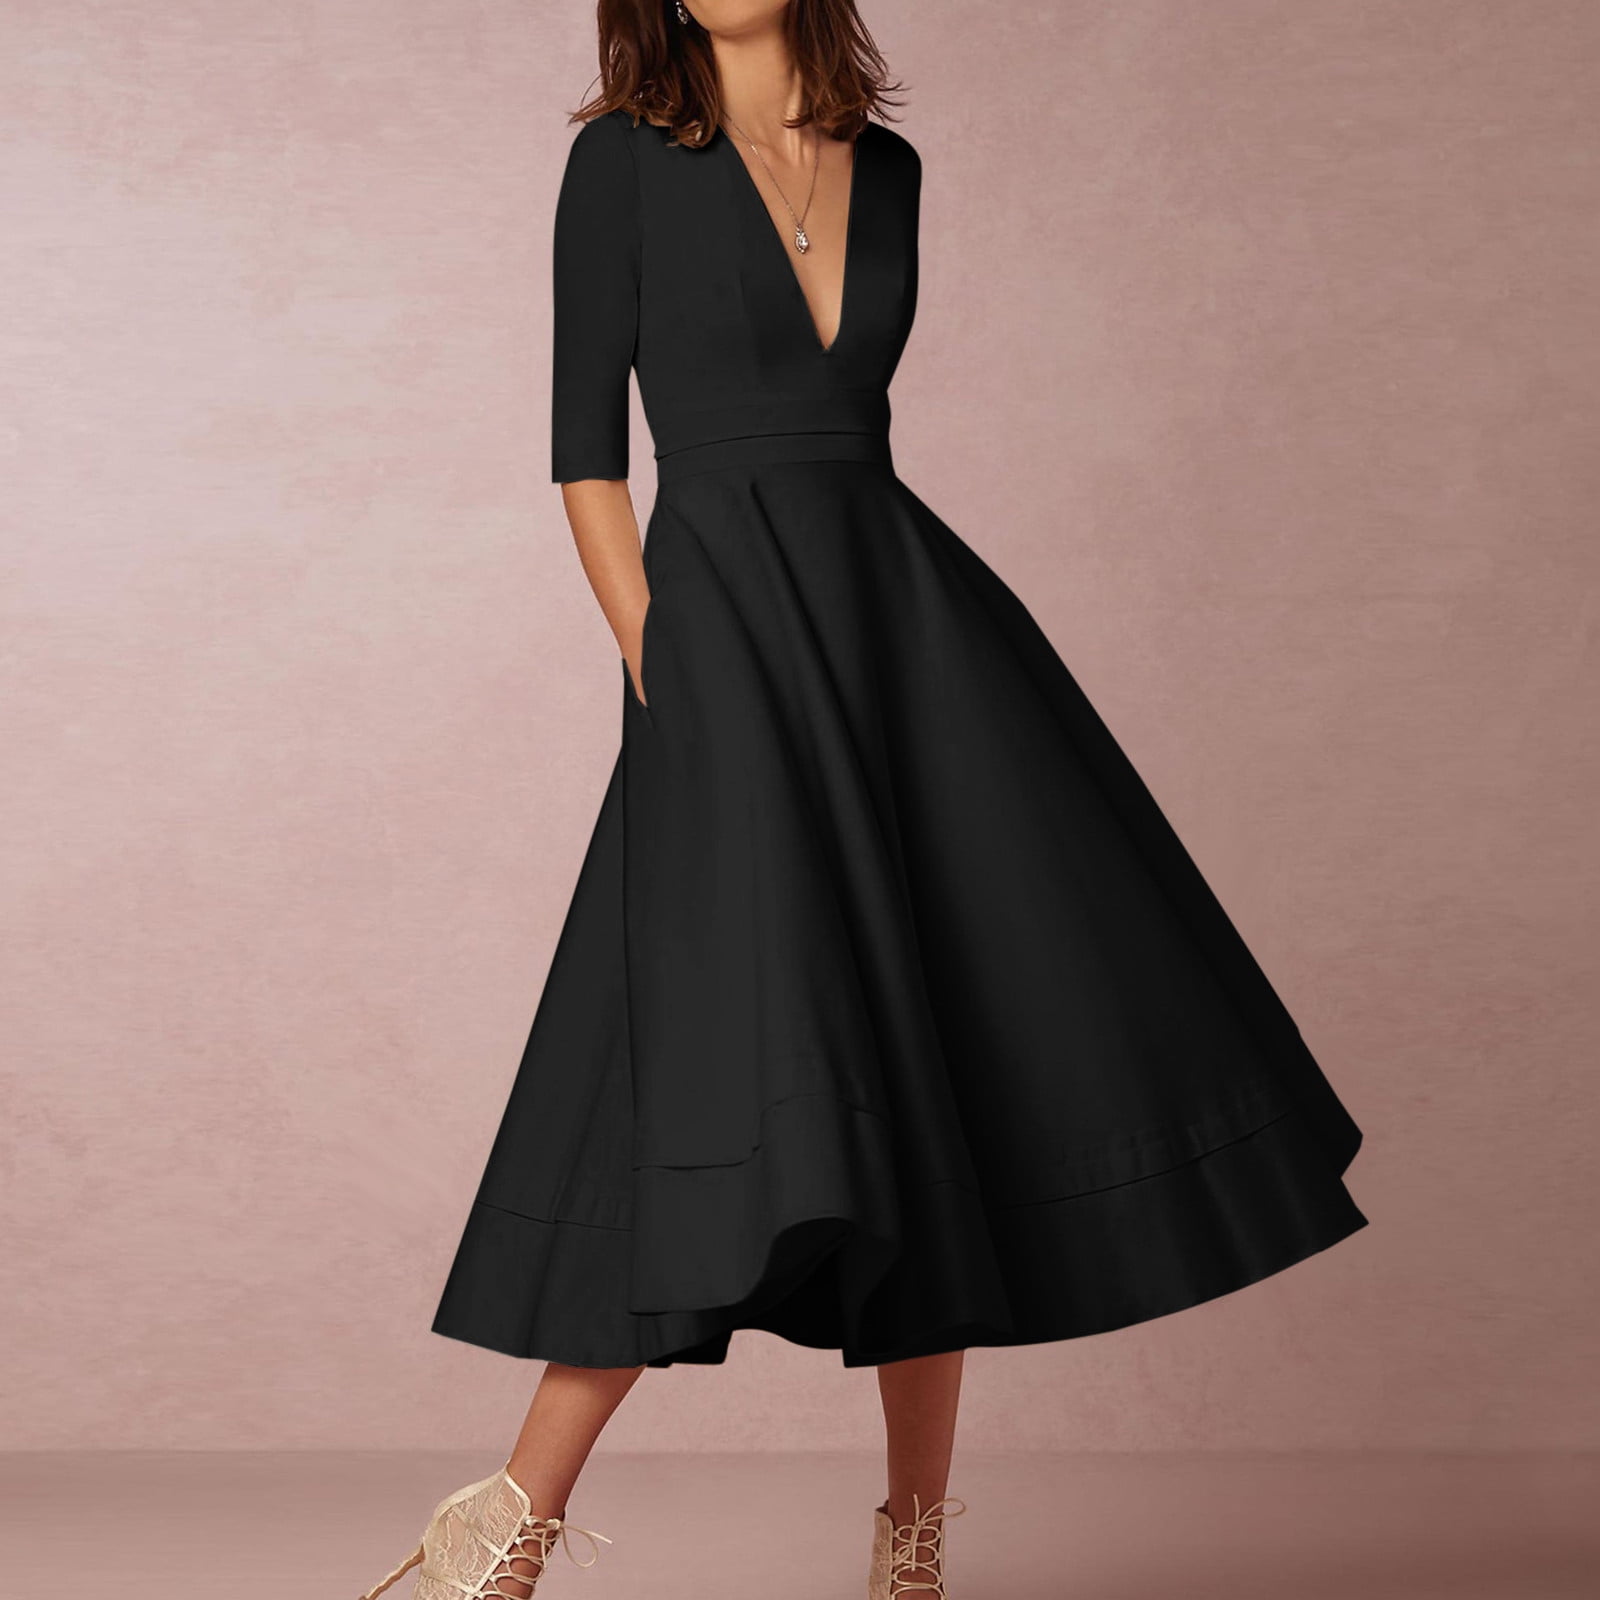 Finelylove Dresses That Hide Belly Fat Women Formal Dresses A-line Knee  Length Short Sleeve Solid Black L